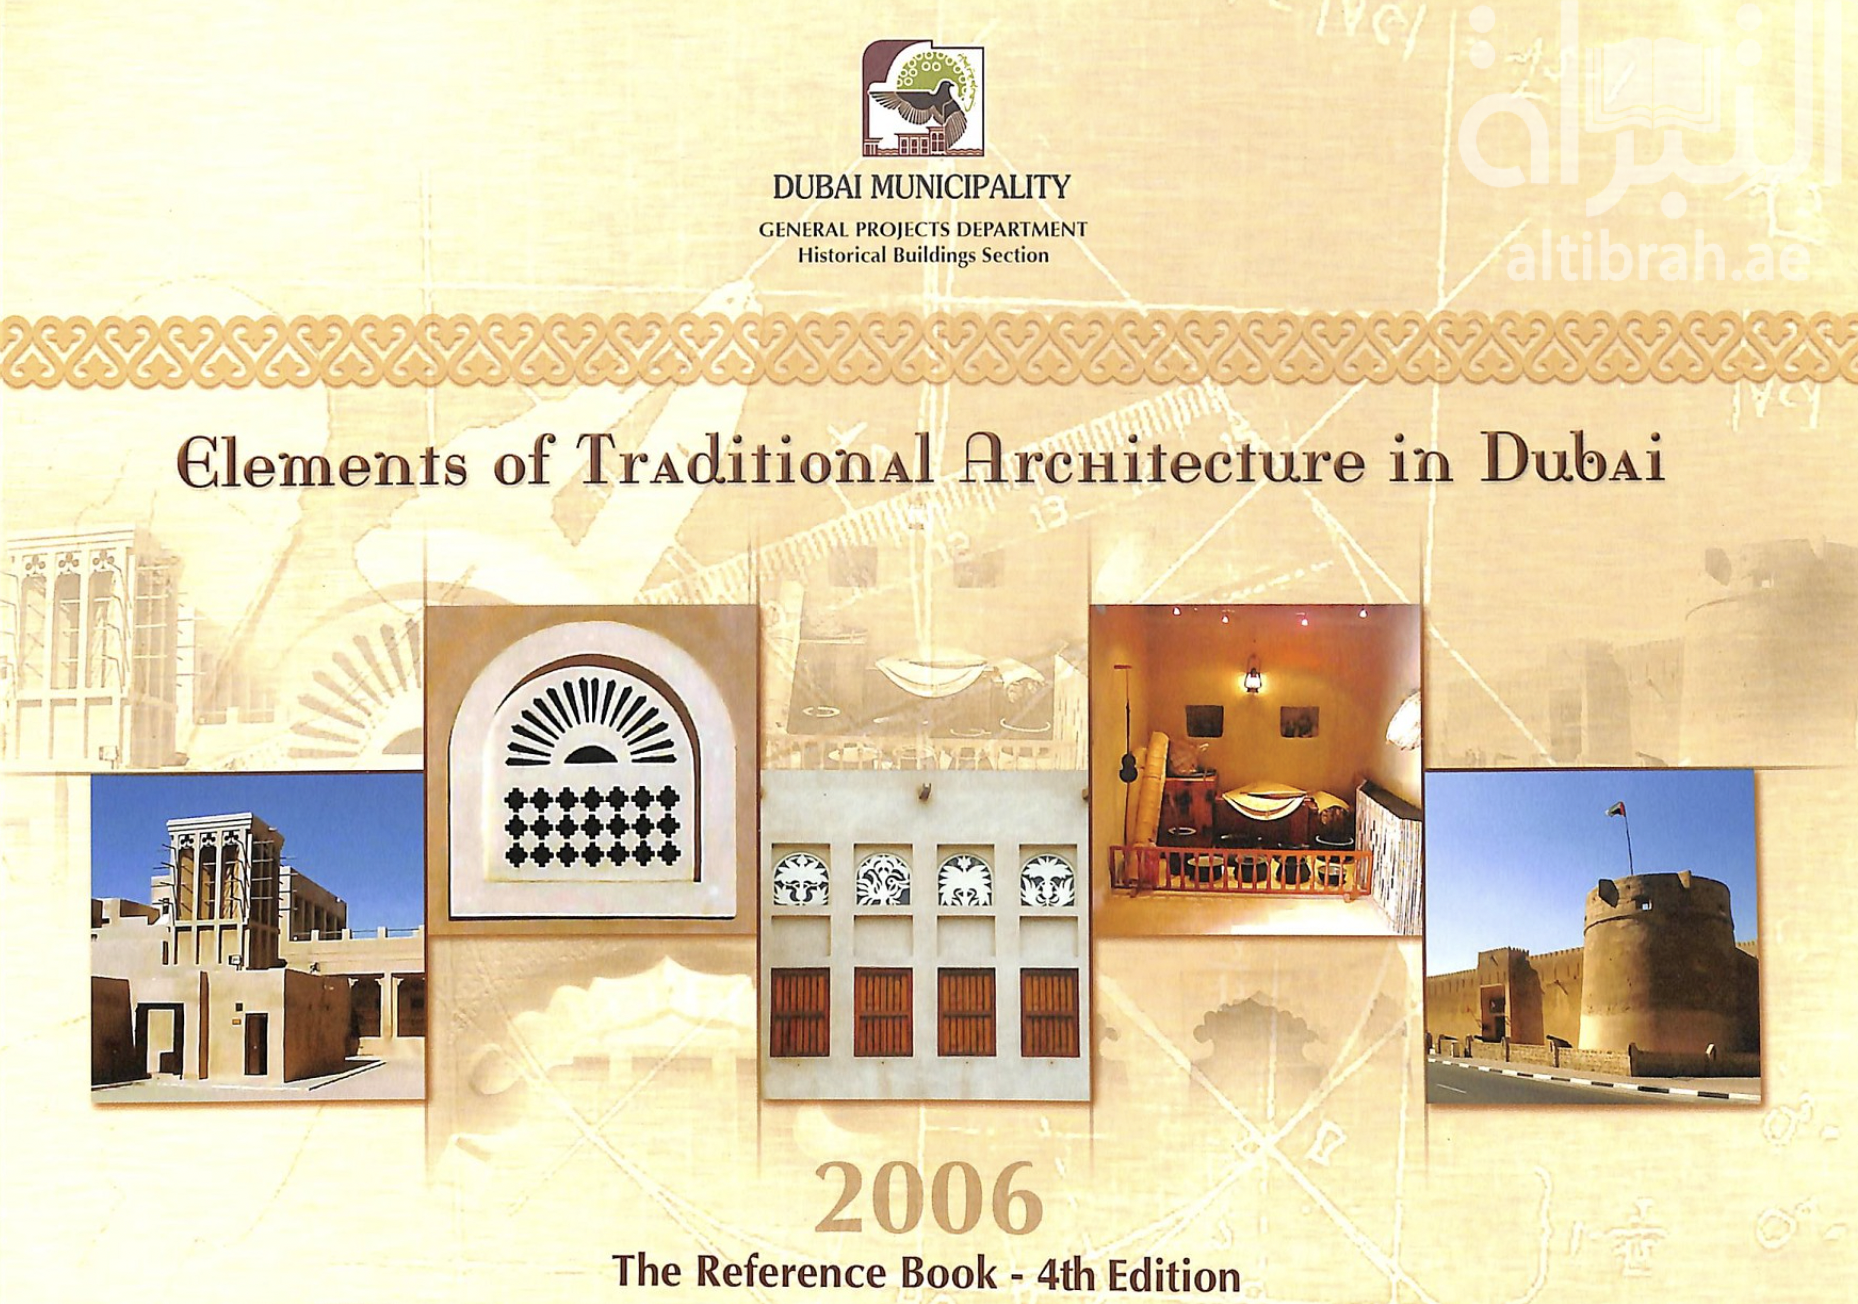 Elementes of Traditional Architecture in Dubai